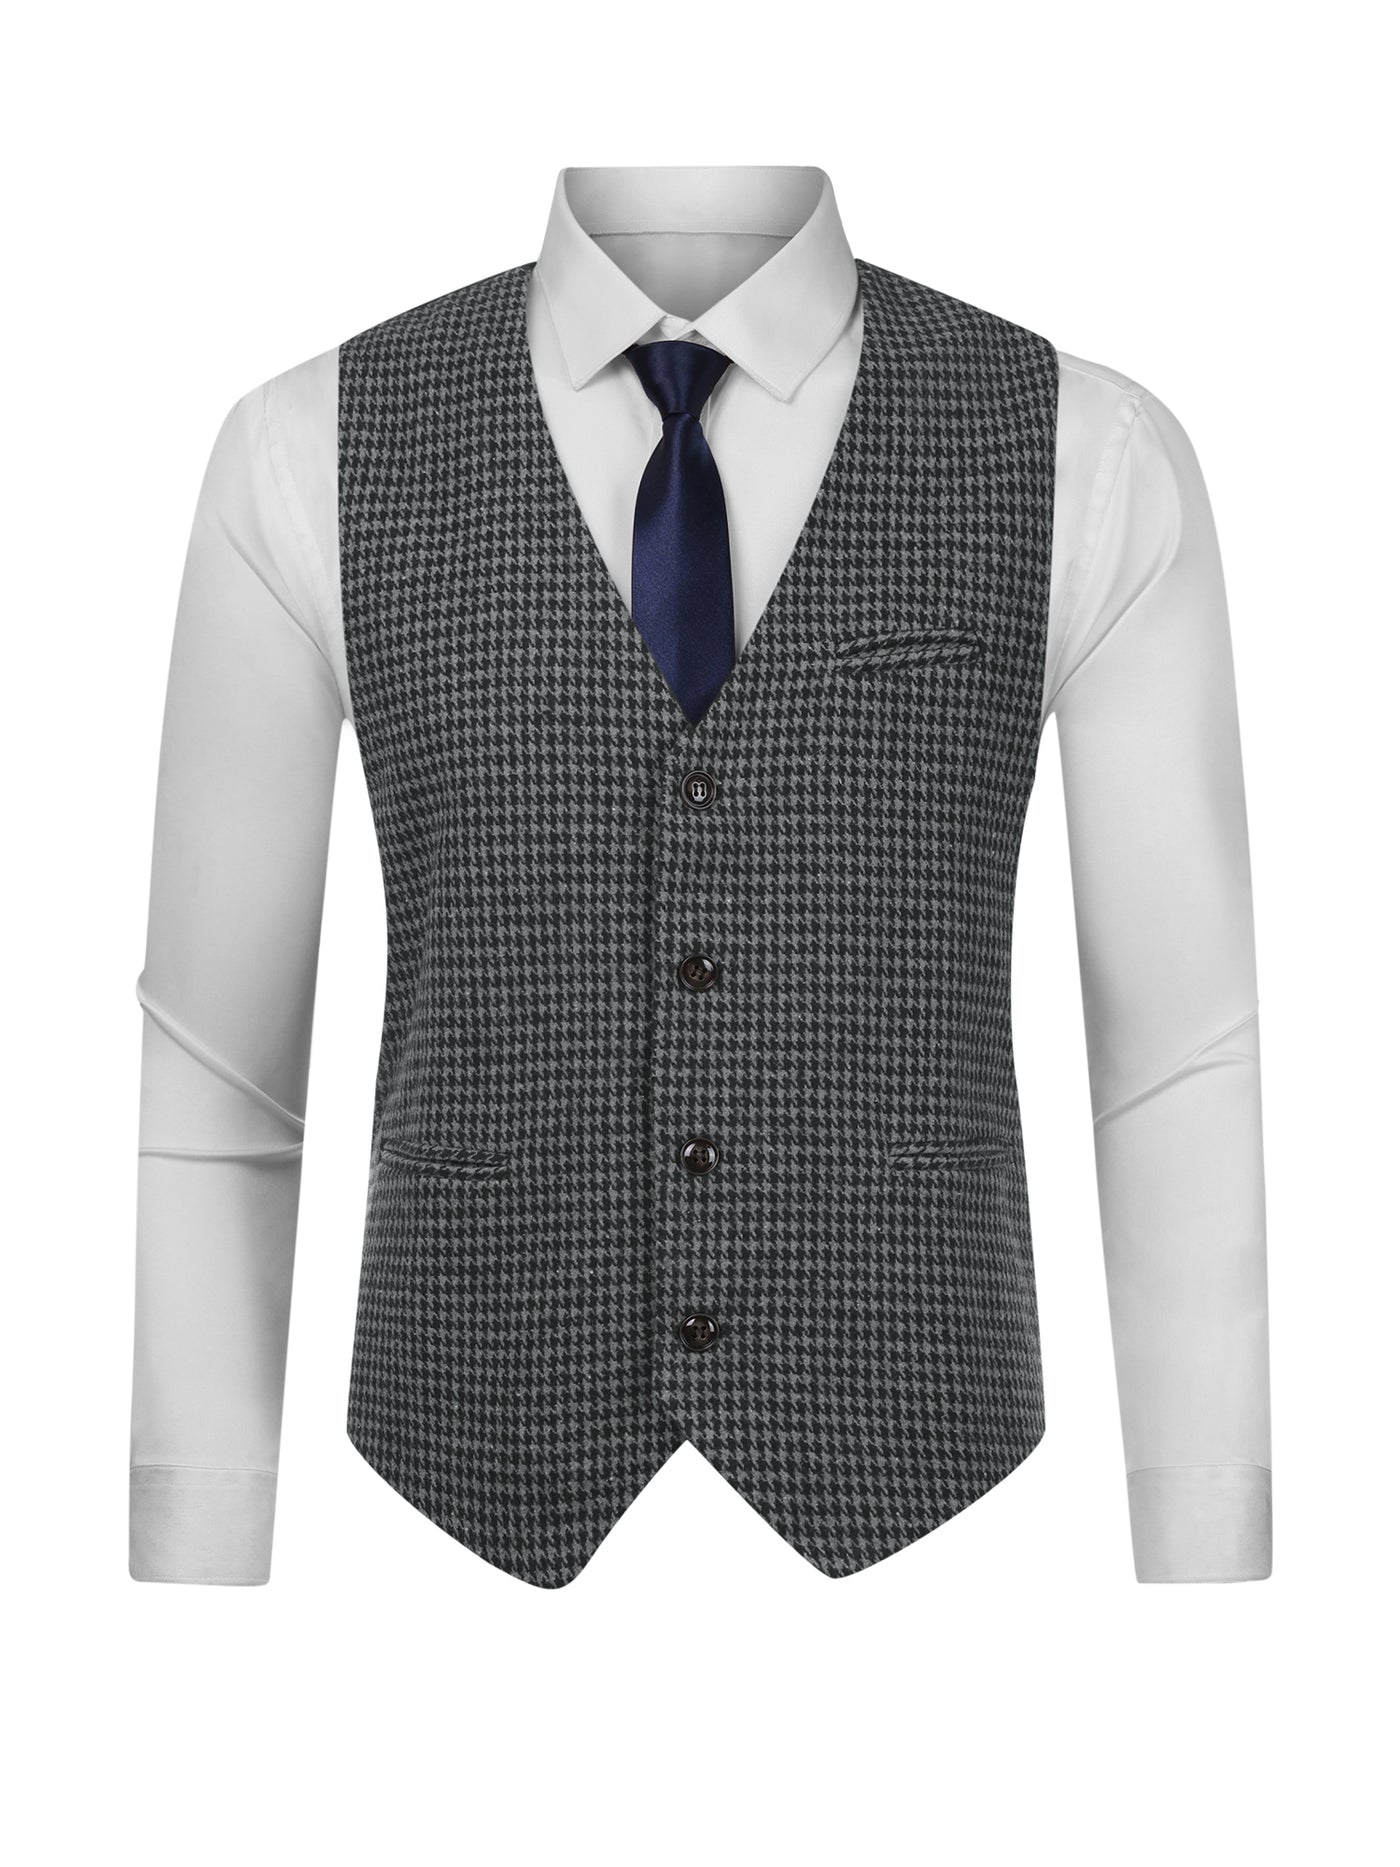 Bublédon Houndstooth Print Waistcoat for Men's Classic Slim Fit Business Formal Dress Vest